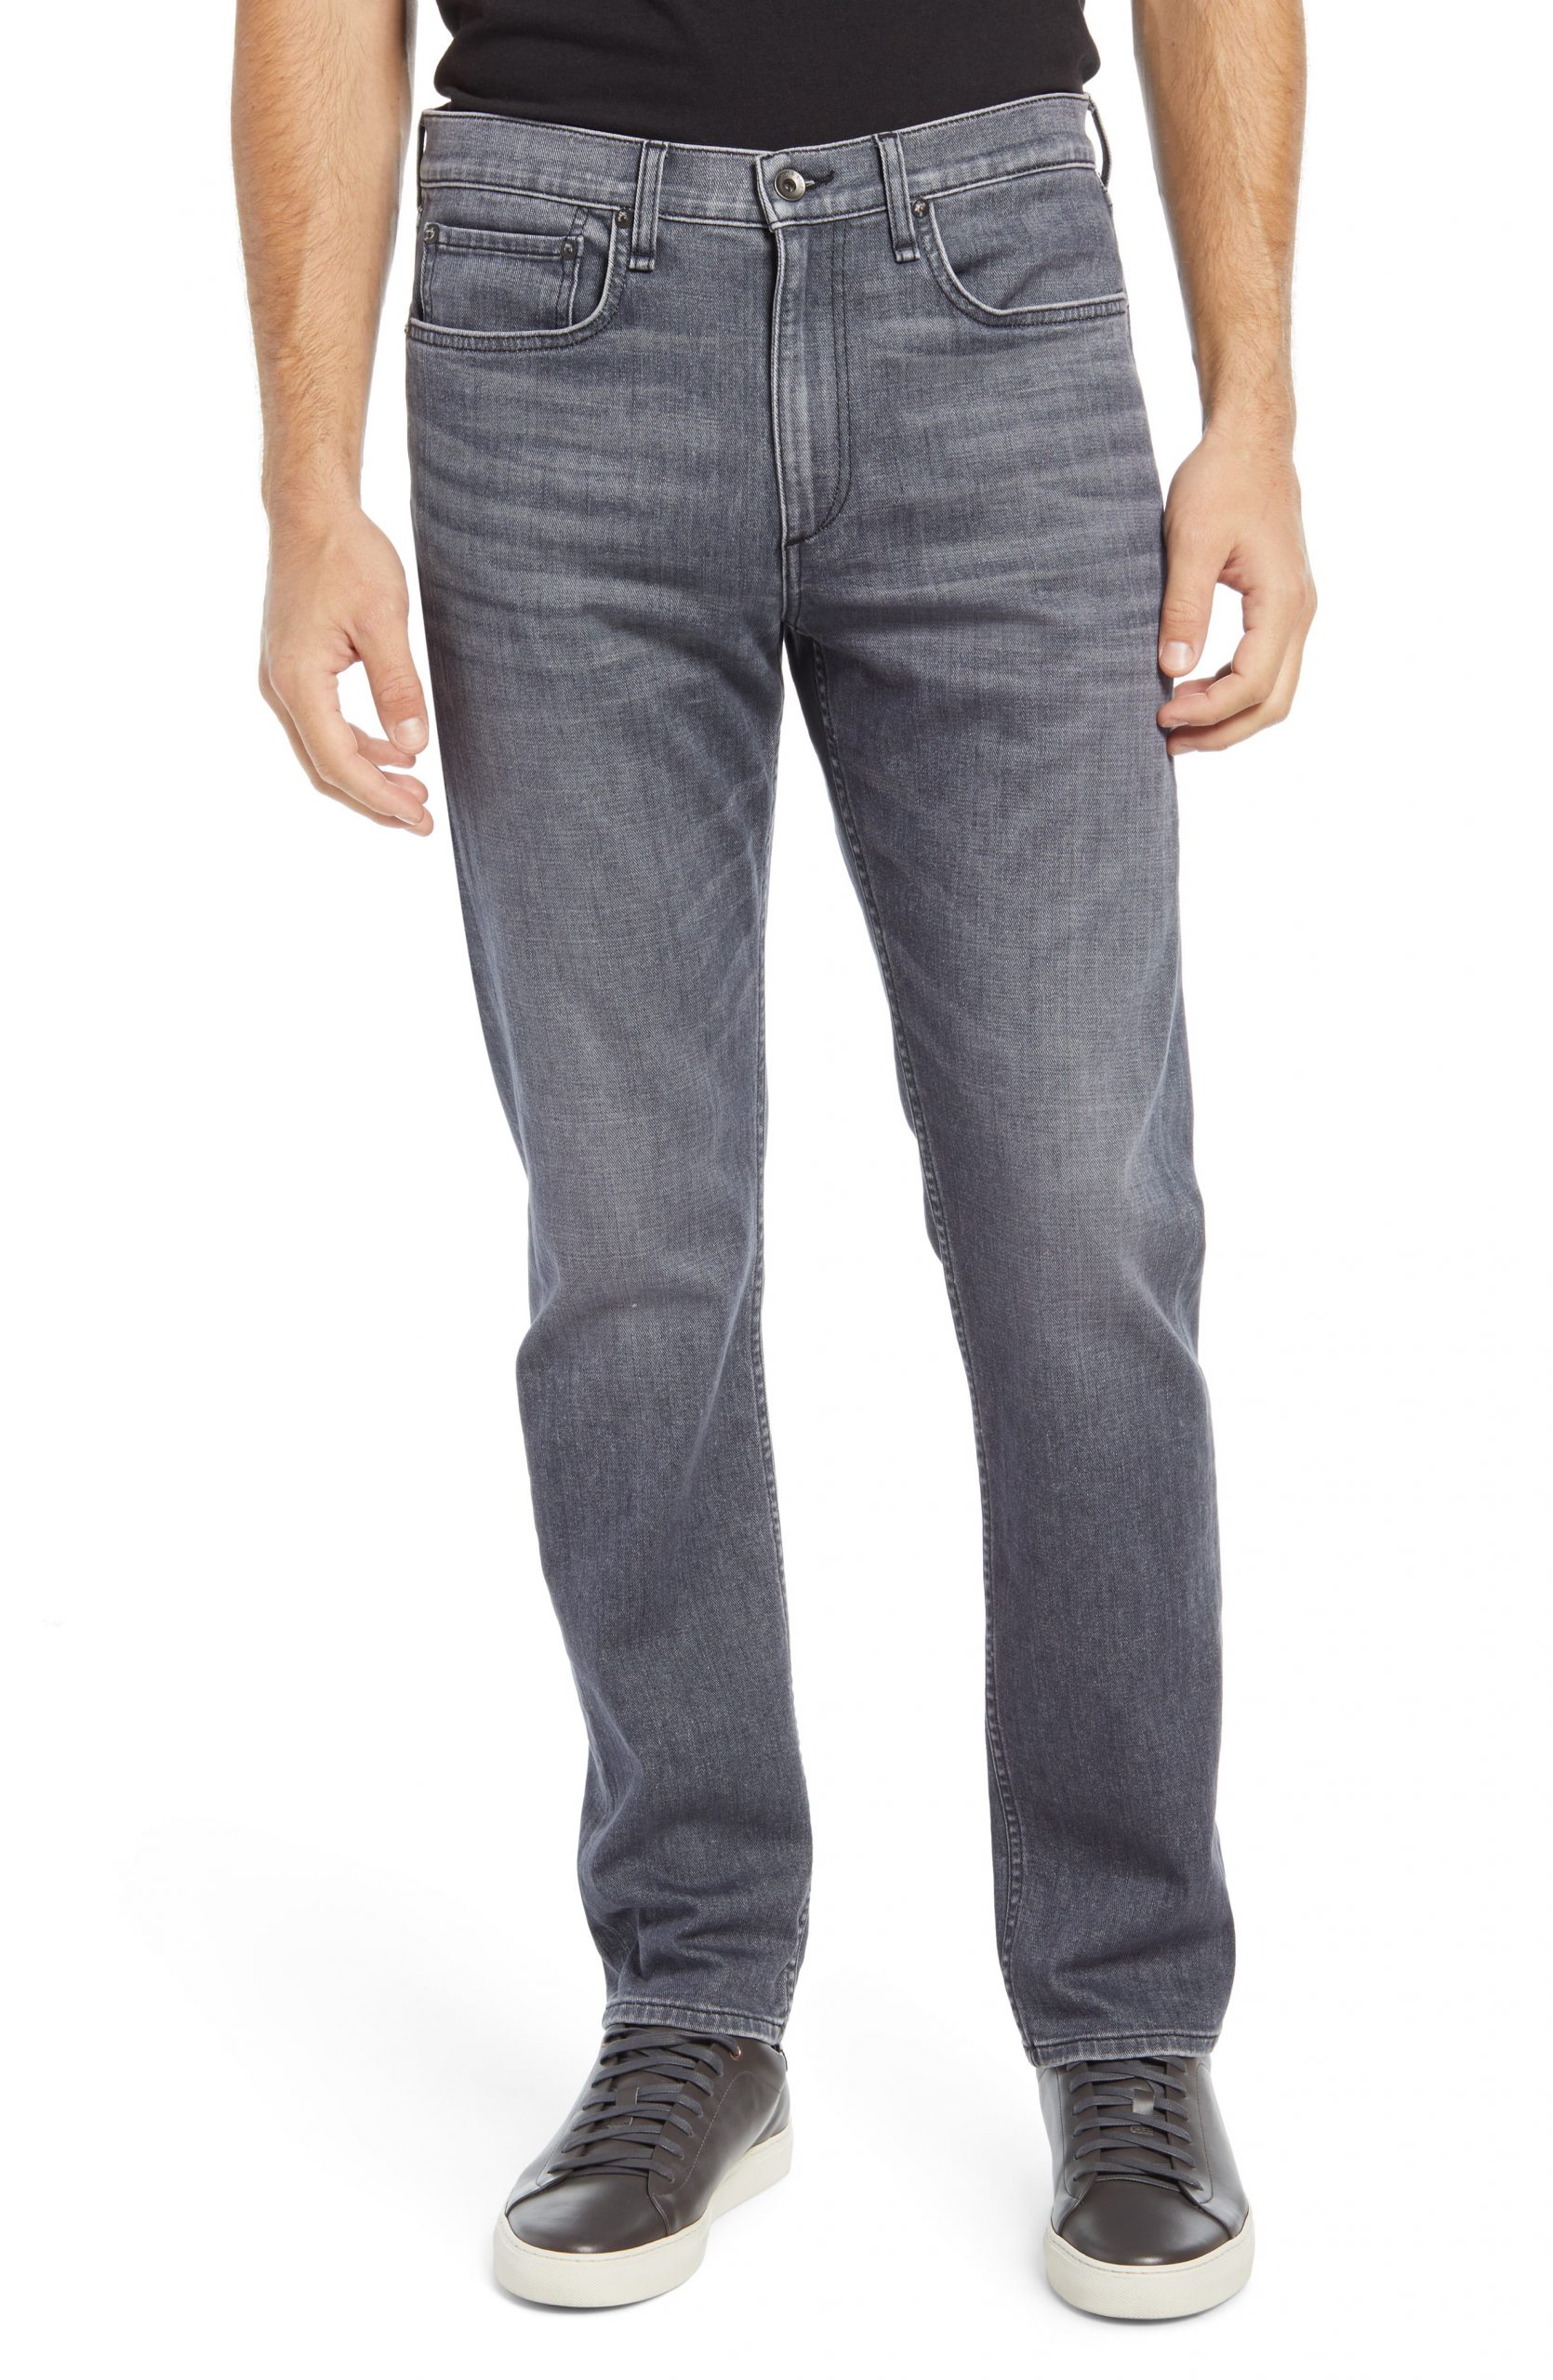 Men’s Rag & Bone Fit 2 Slim Jeans, Size 28 x 32 - Grey | The Fashionisto